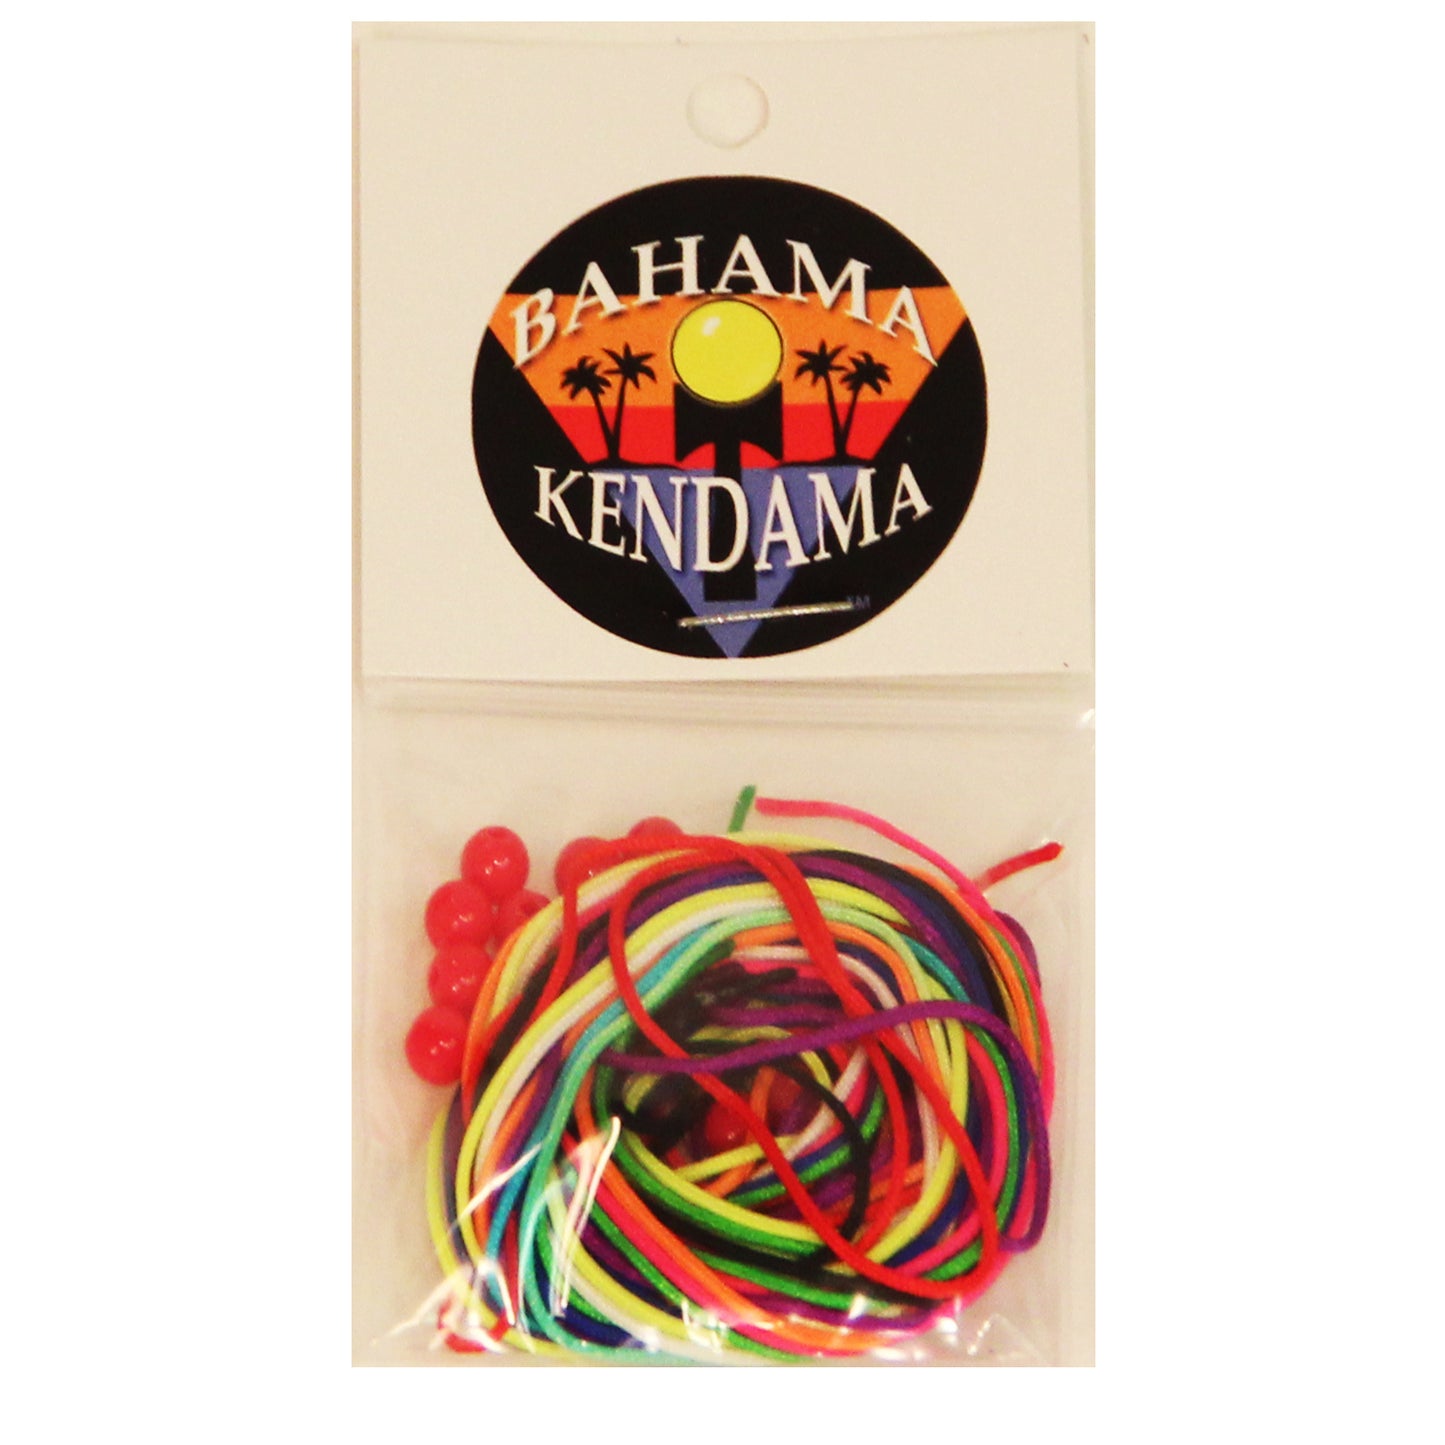 Bahama Kendama 10-Pack of Kendama Strings